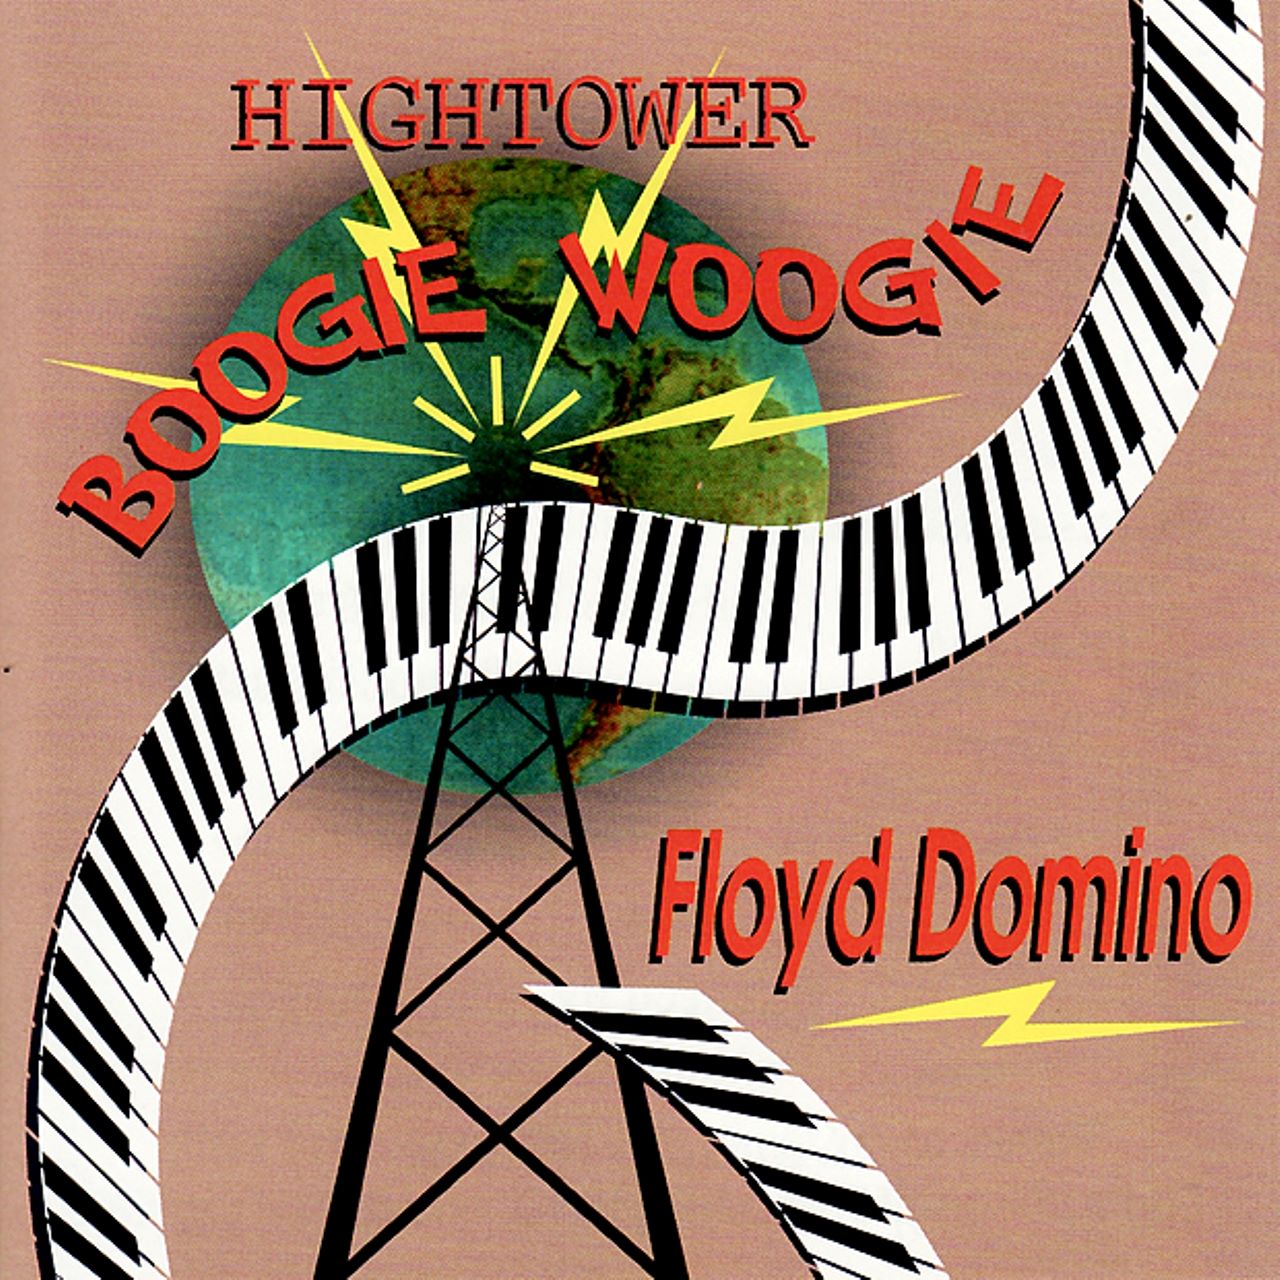 Floyd Domino - Hightower Boogie Woogie cover album